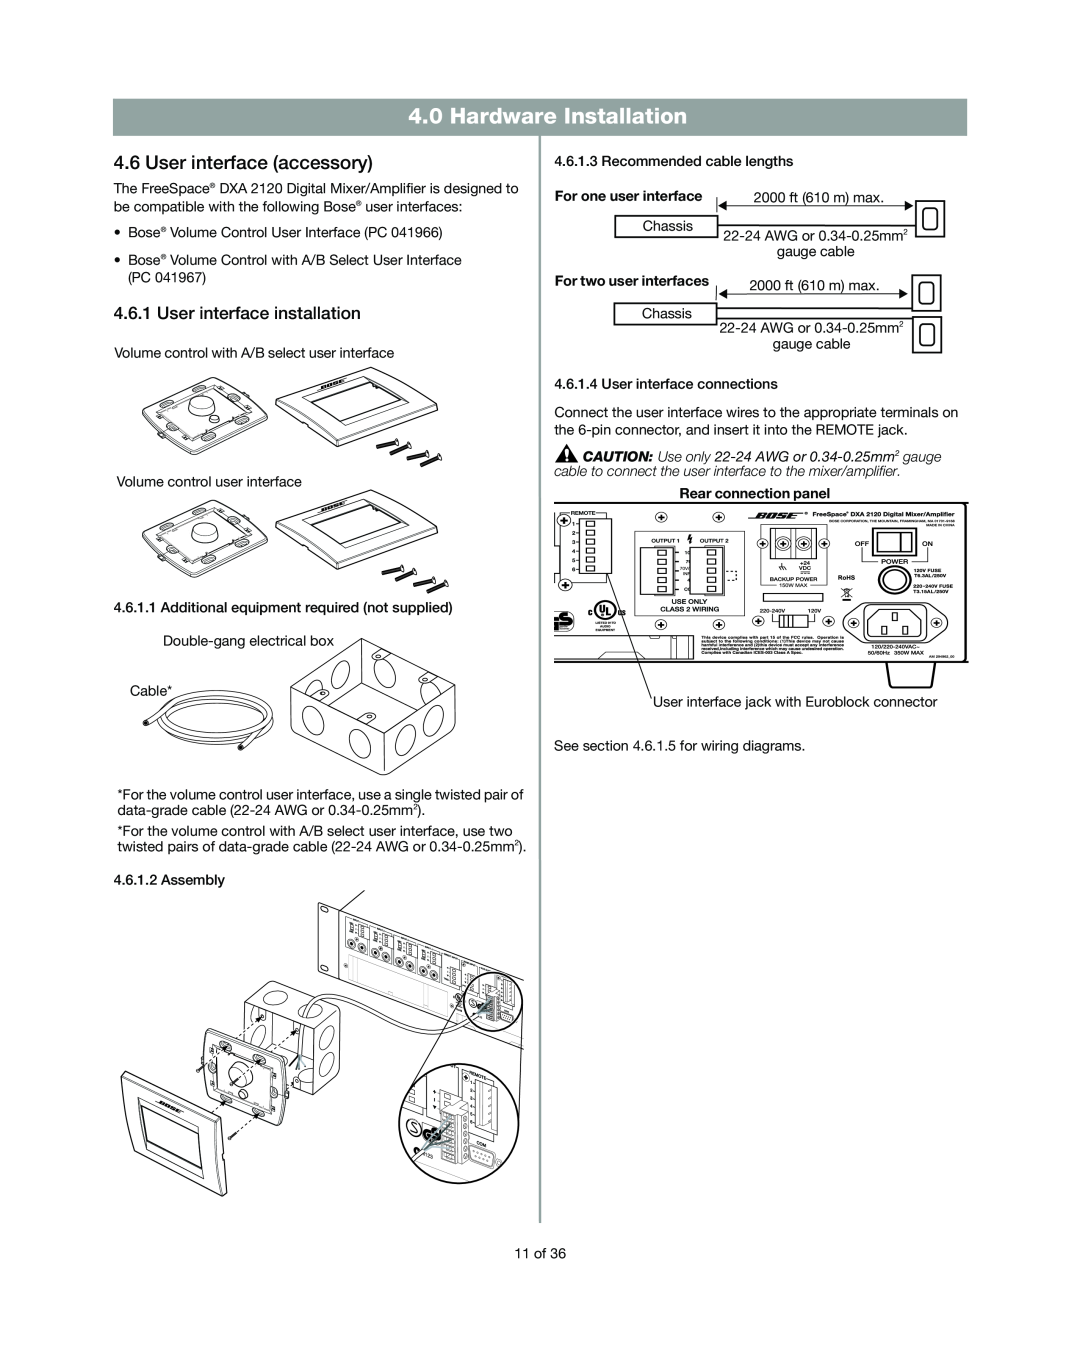 Bose DXA2120 manual User interface accessory, Hardware Installation, User interface installation 